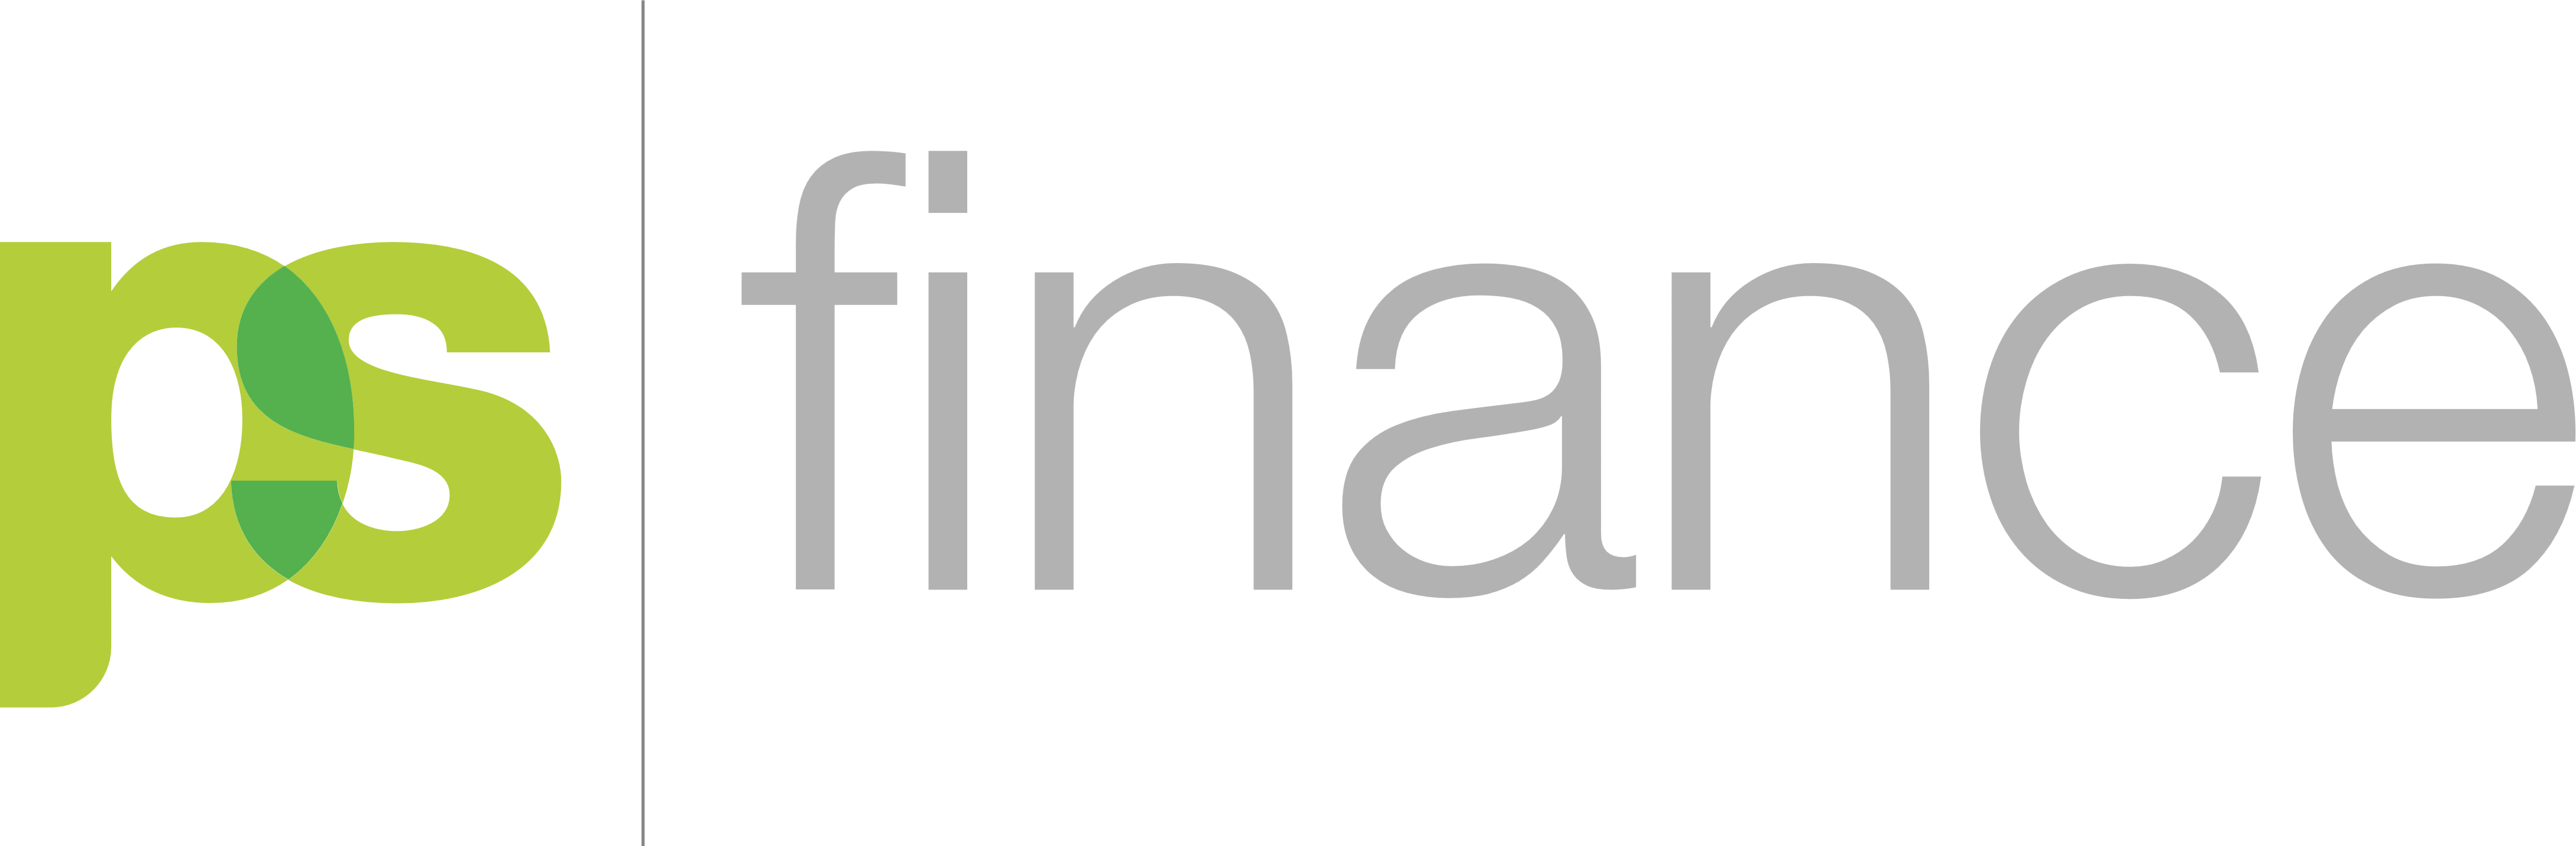 Ps Finance Logos Download